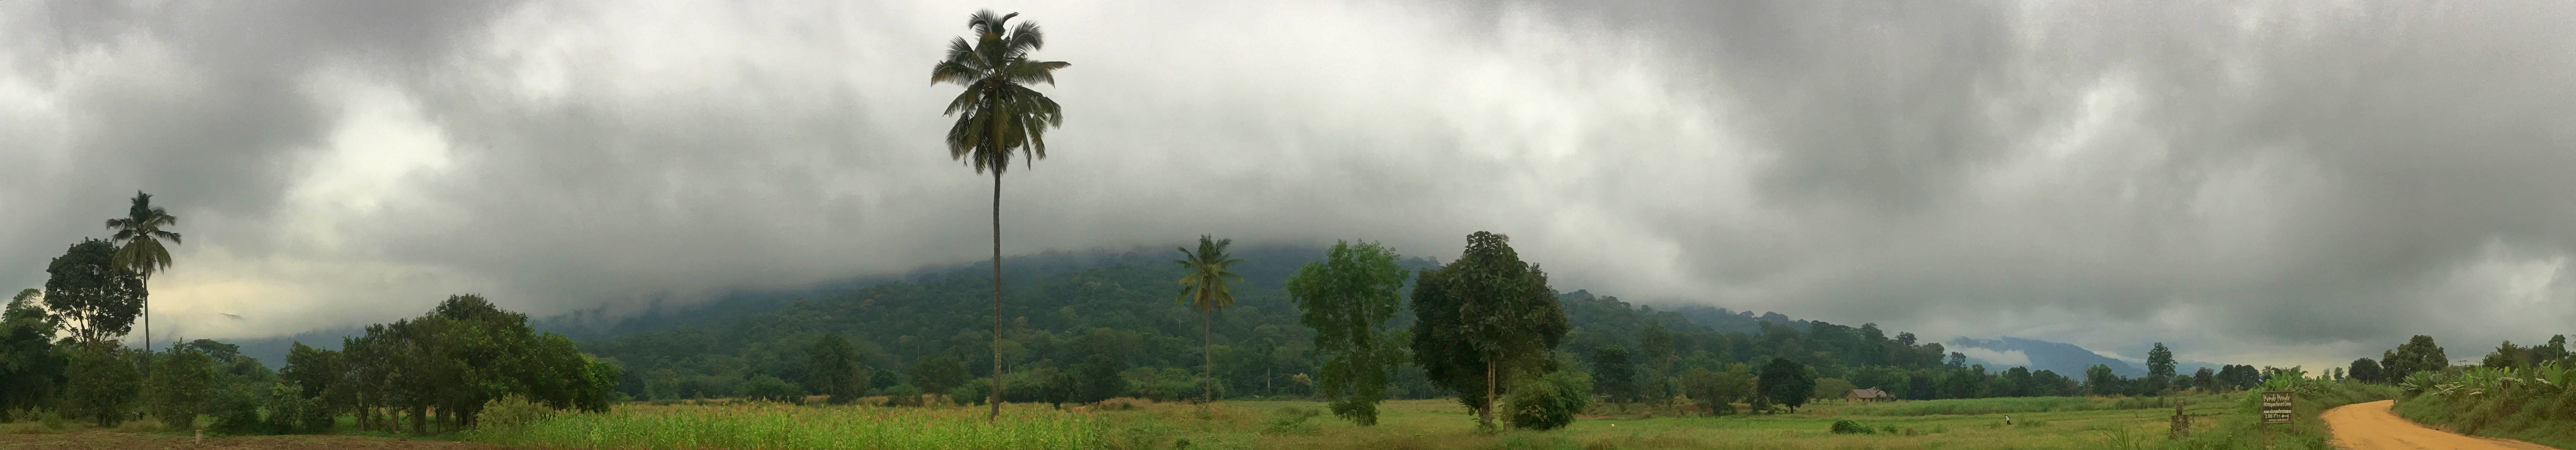 Tanzania Udzungwa Mountains morning mist